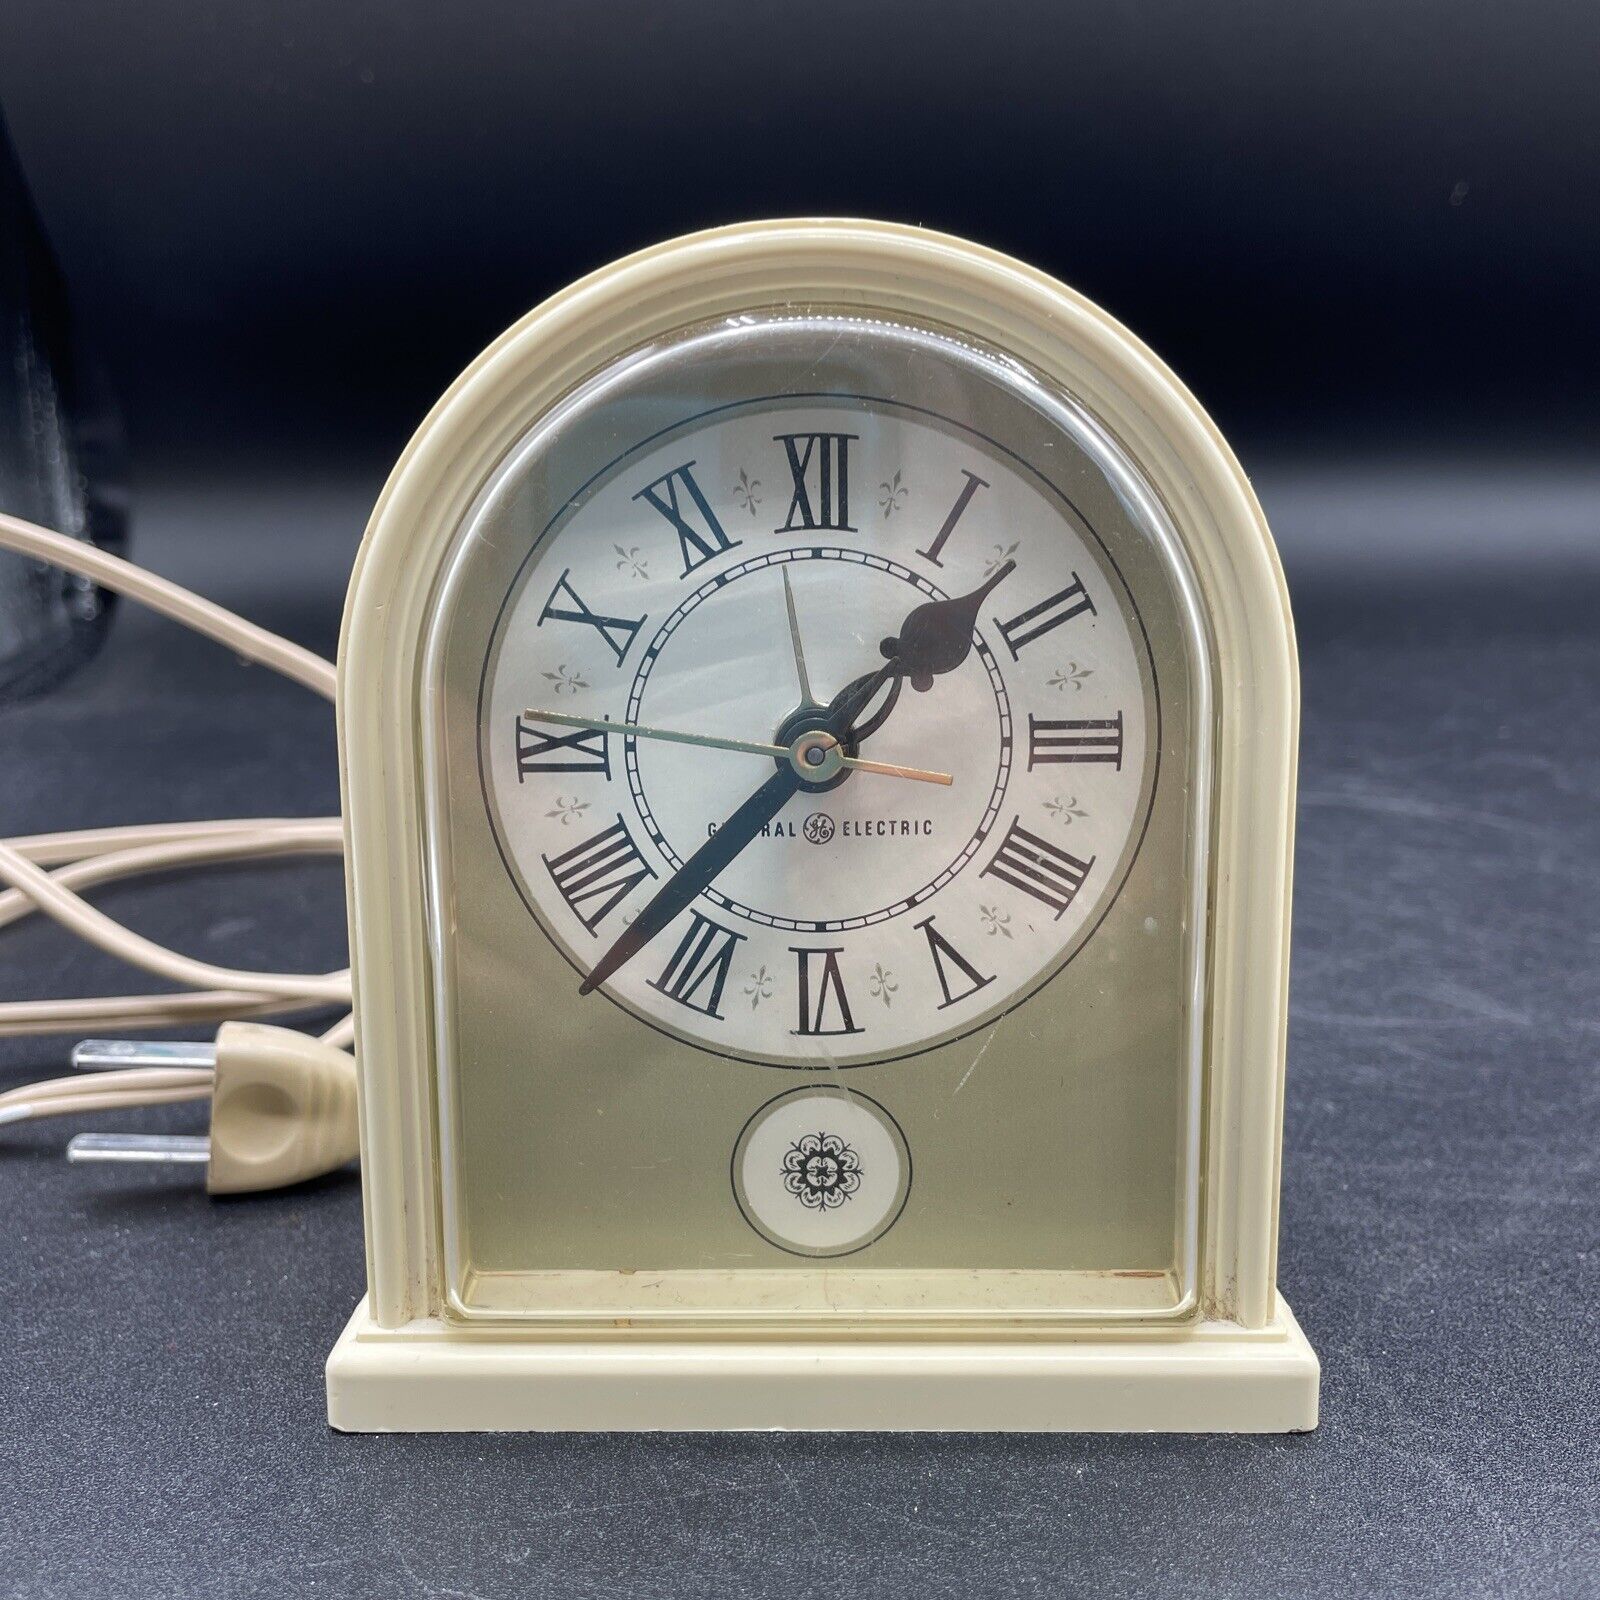 General Electric Alarm Clock Vtg Model 7401 USA Green Dome Shape Roman Numeral